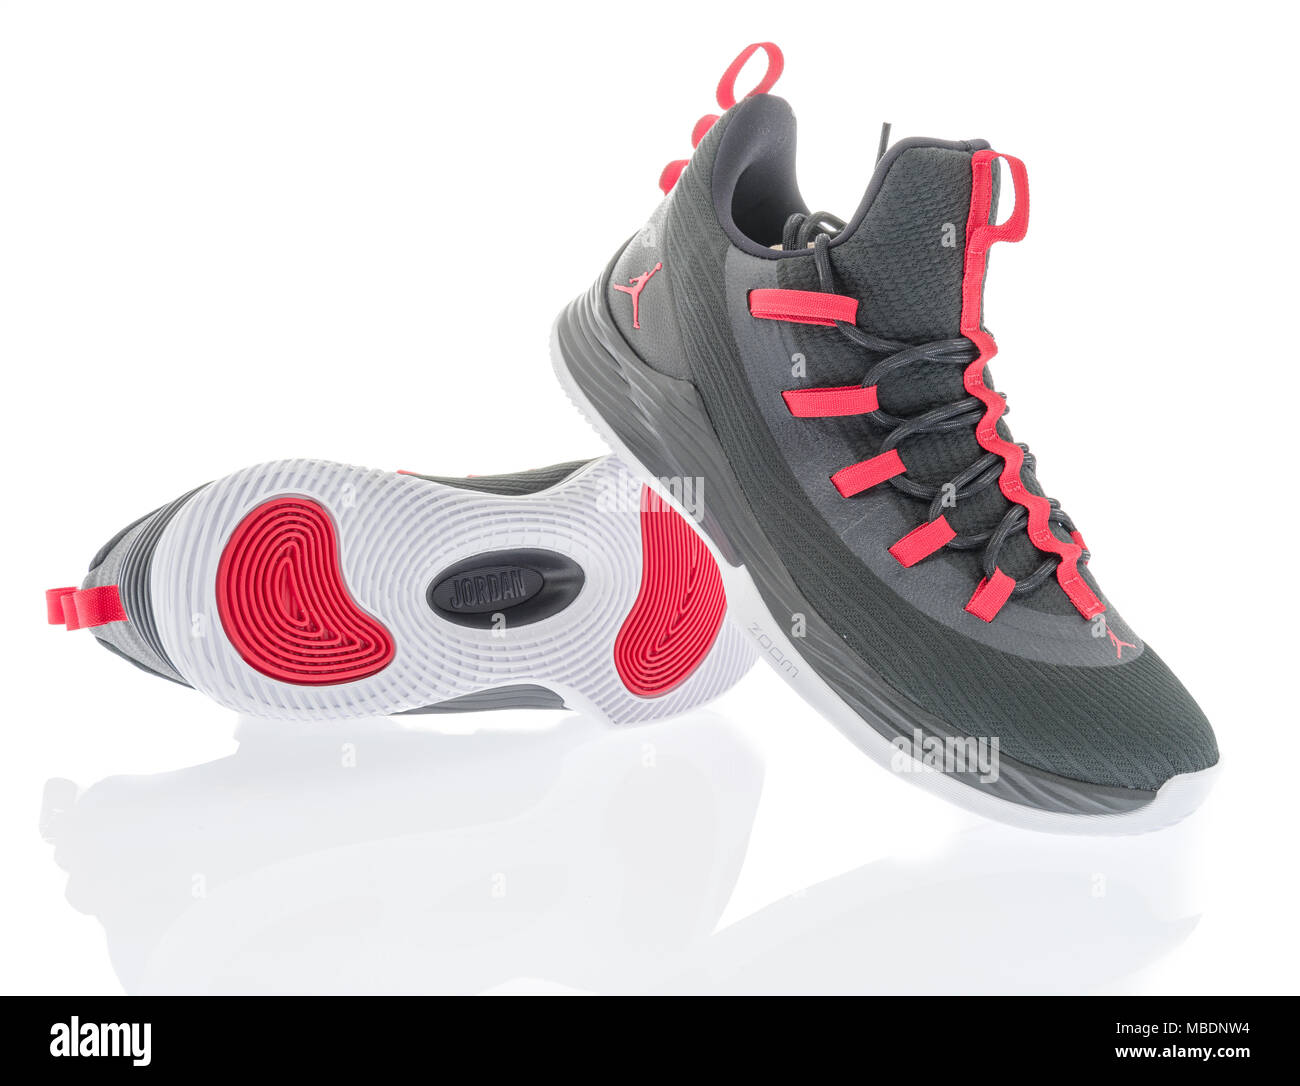 Zapatillas de baloncesto nike fotografías e imágenes de alta resolución -  Alamy